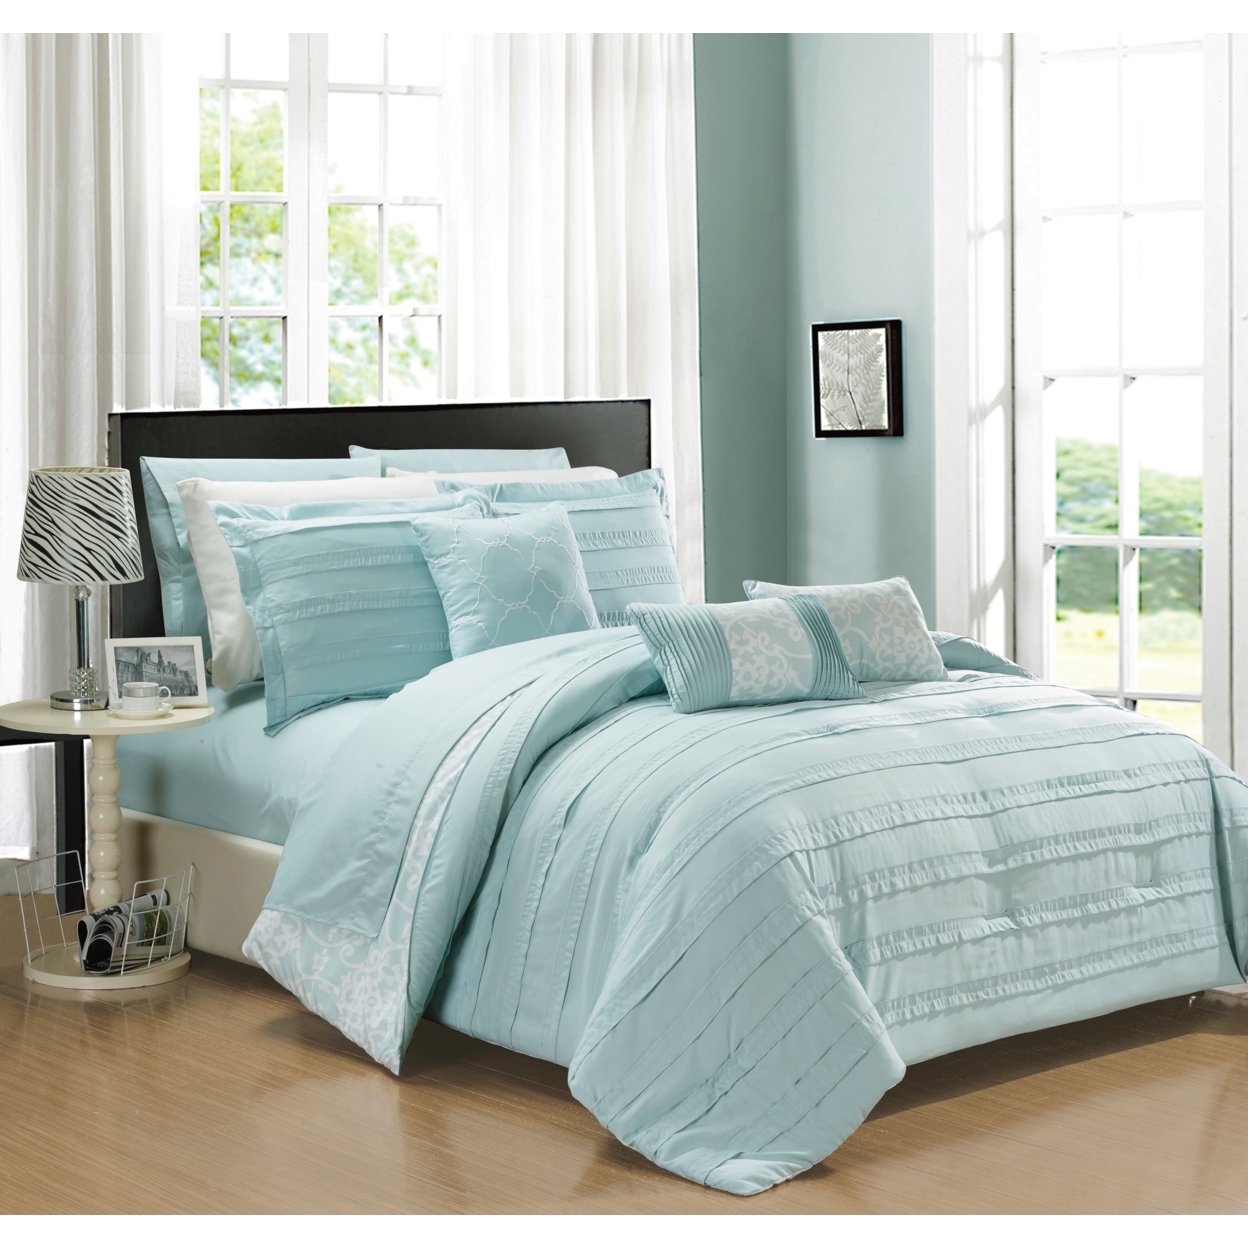 10-Piece Reversible Bed In A Bag Comforter & Sheet Set, Multiple Colors - Navy, Queen